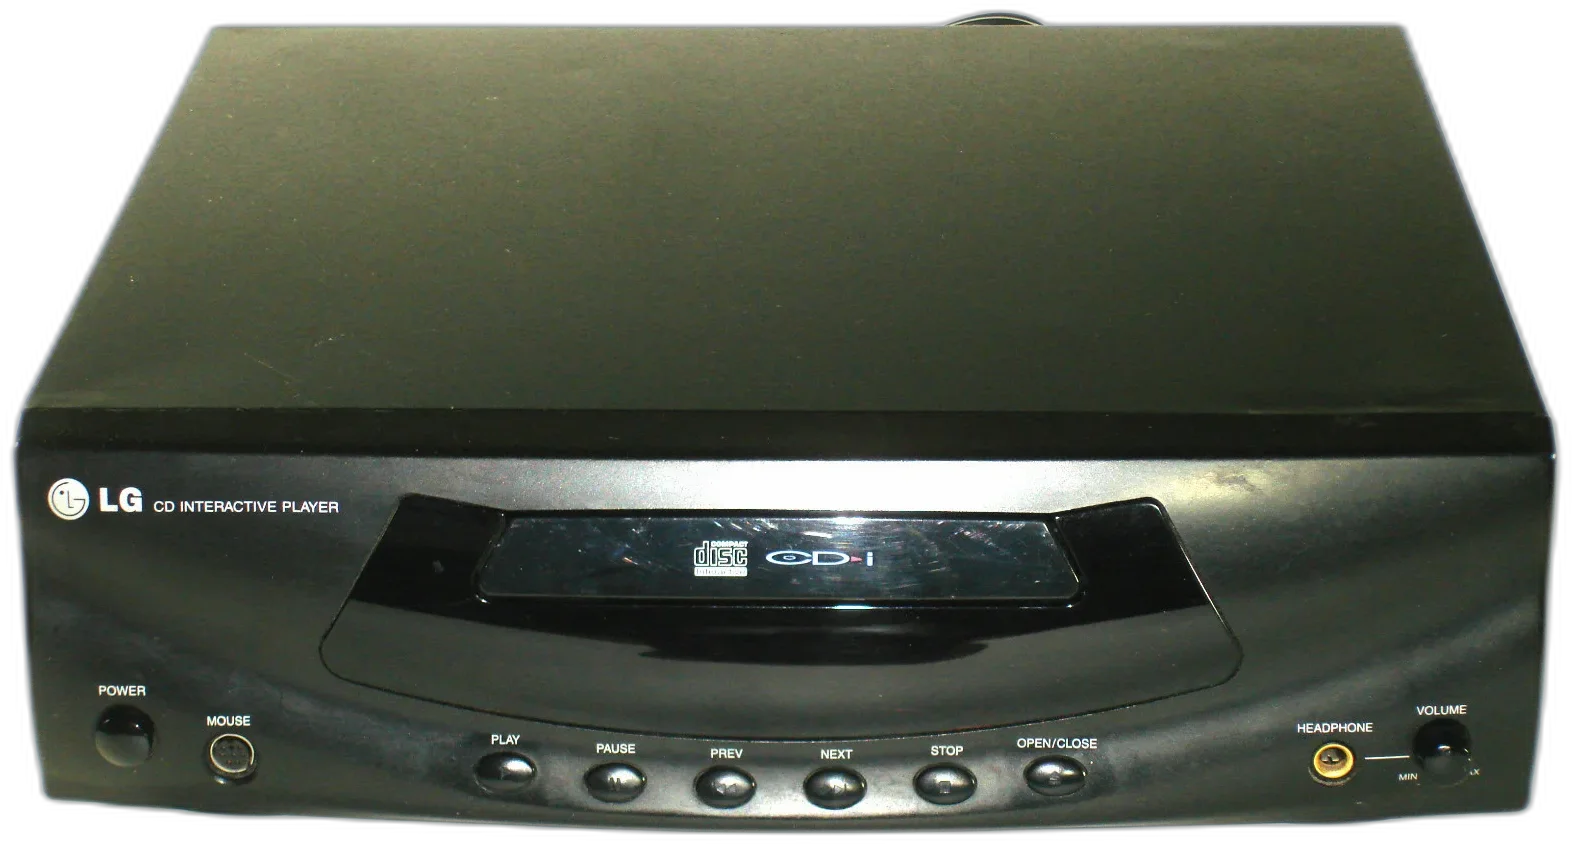  LG/Goldstar CD-I GDI 700M Console